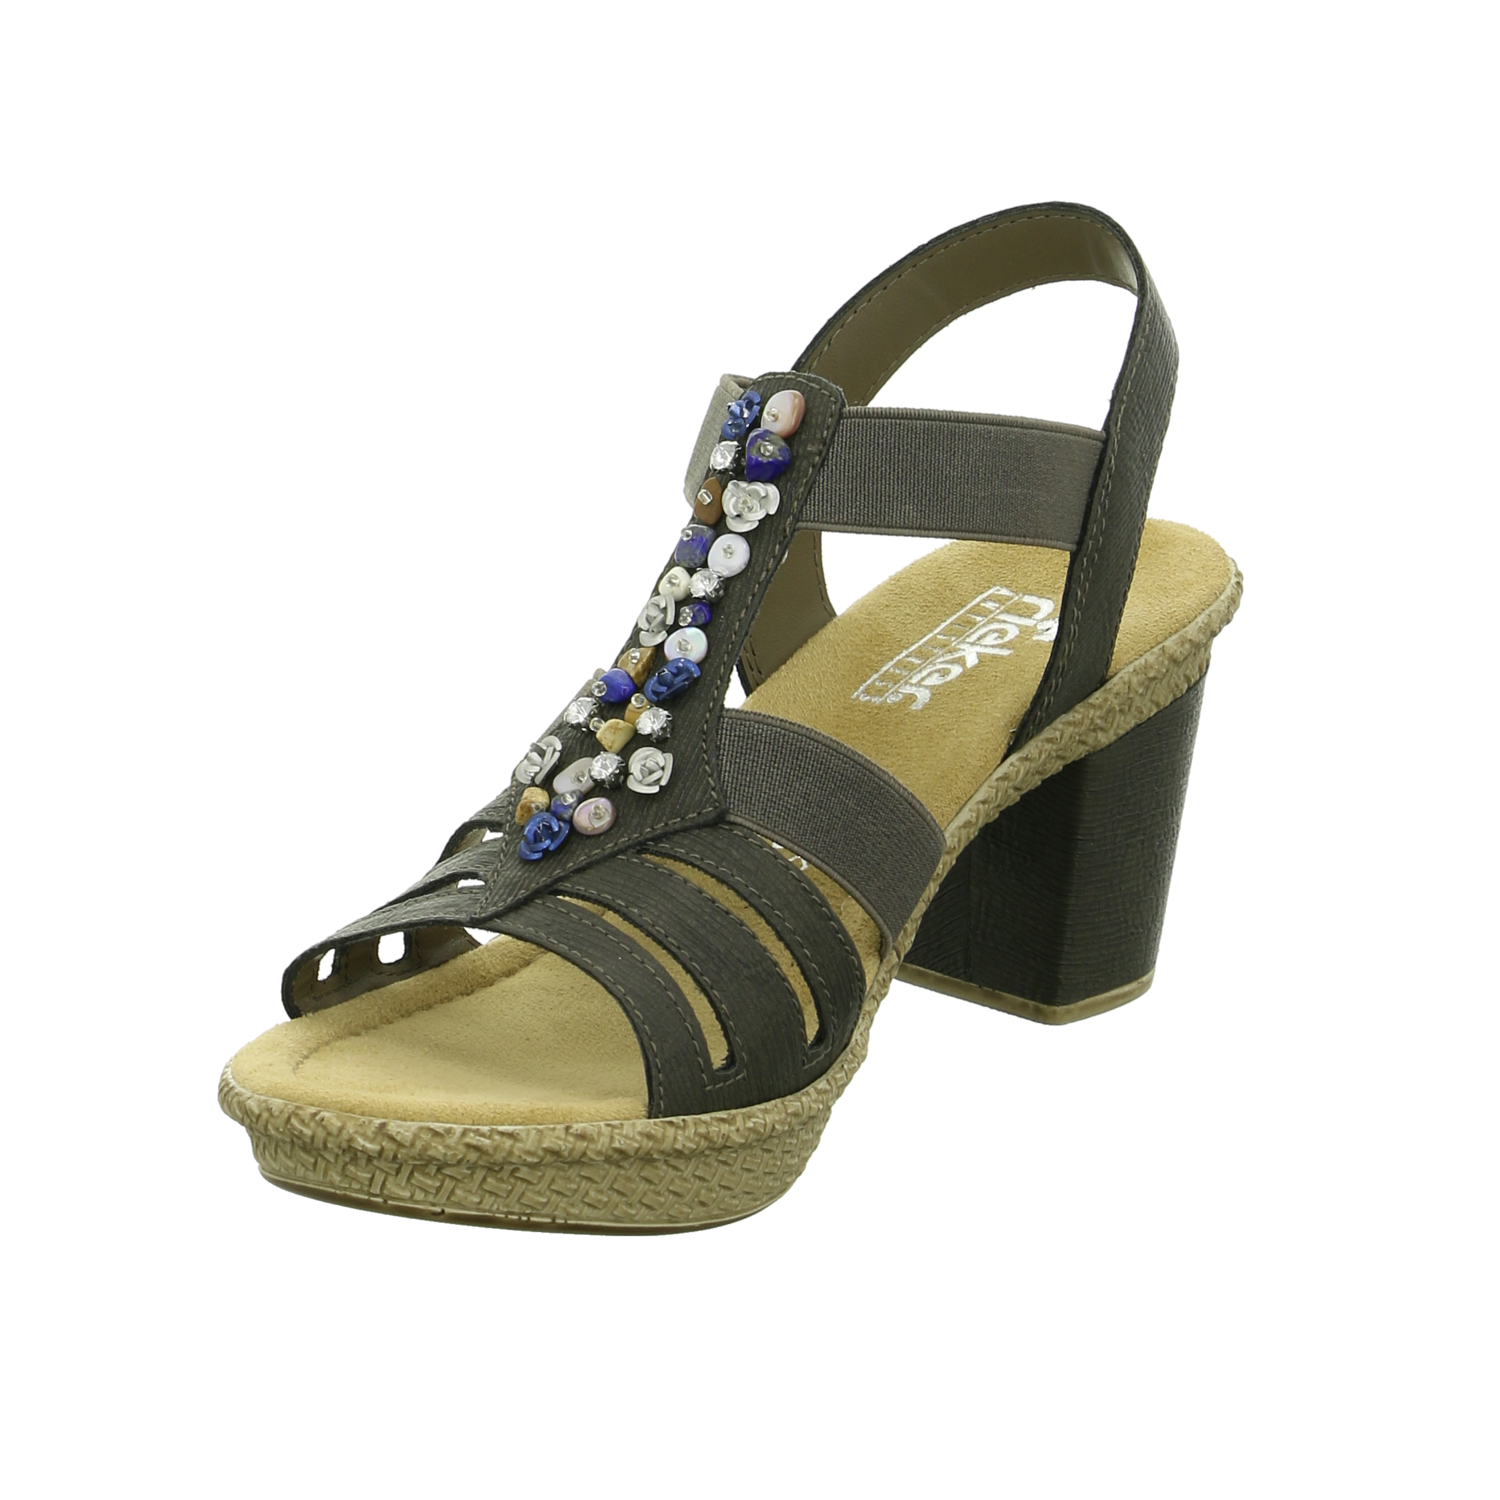 Rieker Sandalette über 45 mm grau / dunkel-grau